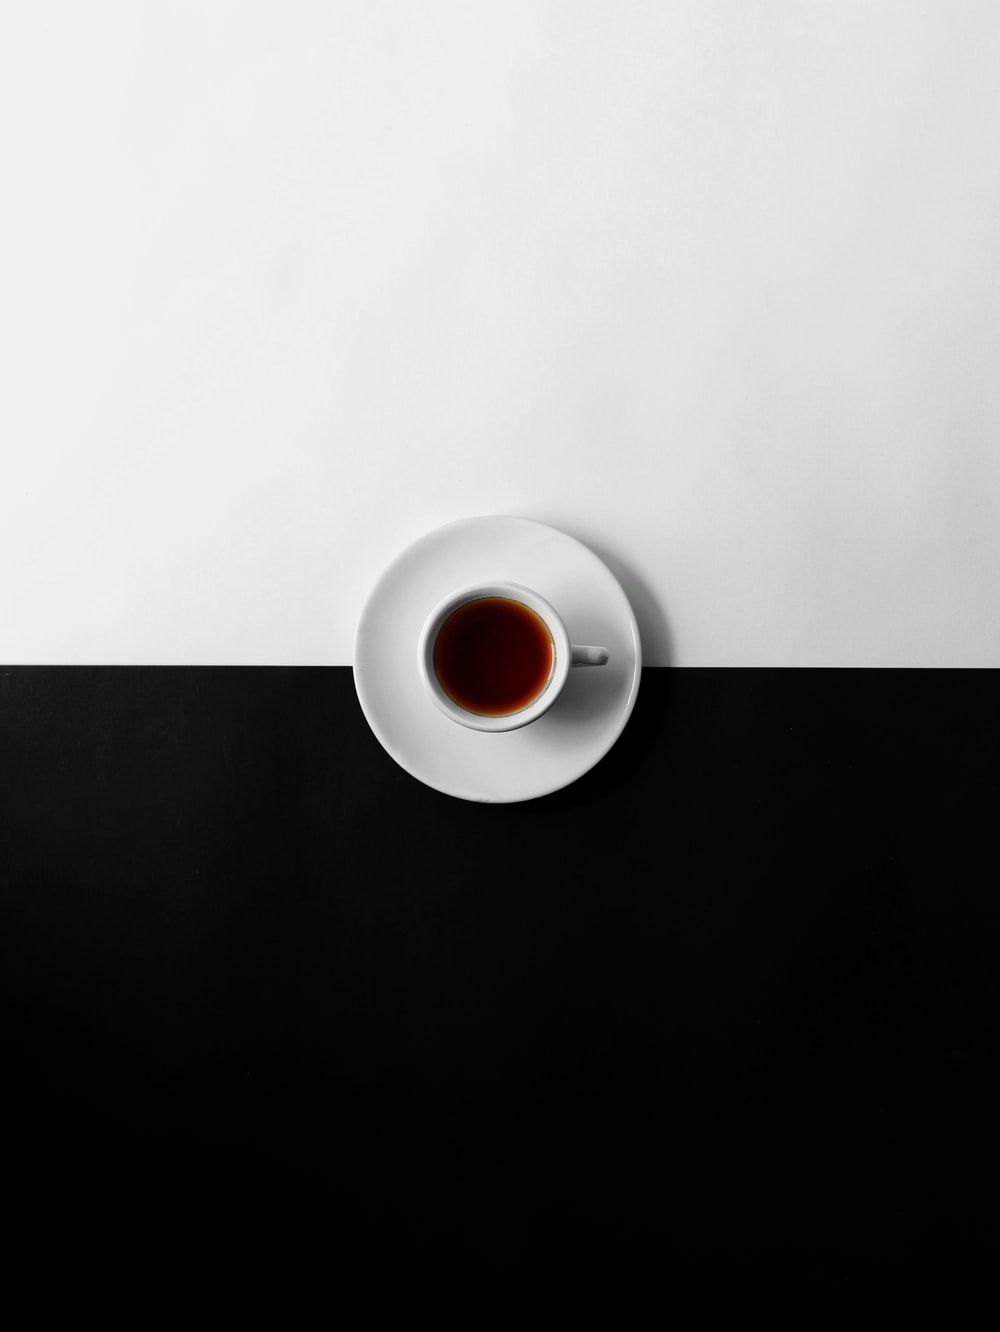 Coffee Wallpaper [HD]. Download Free Image